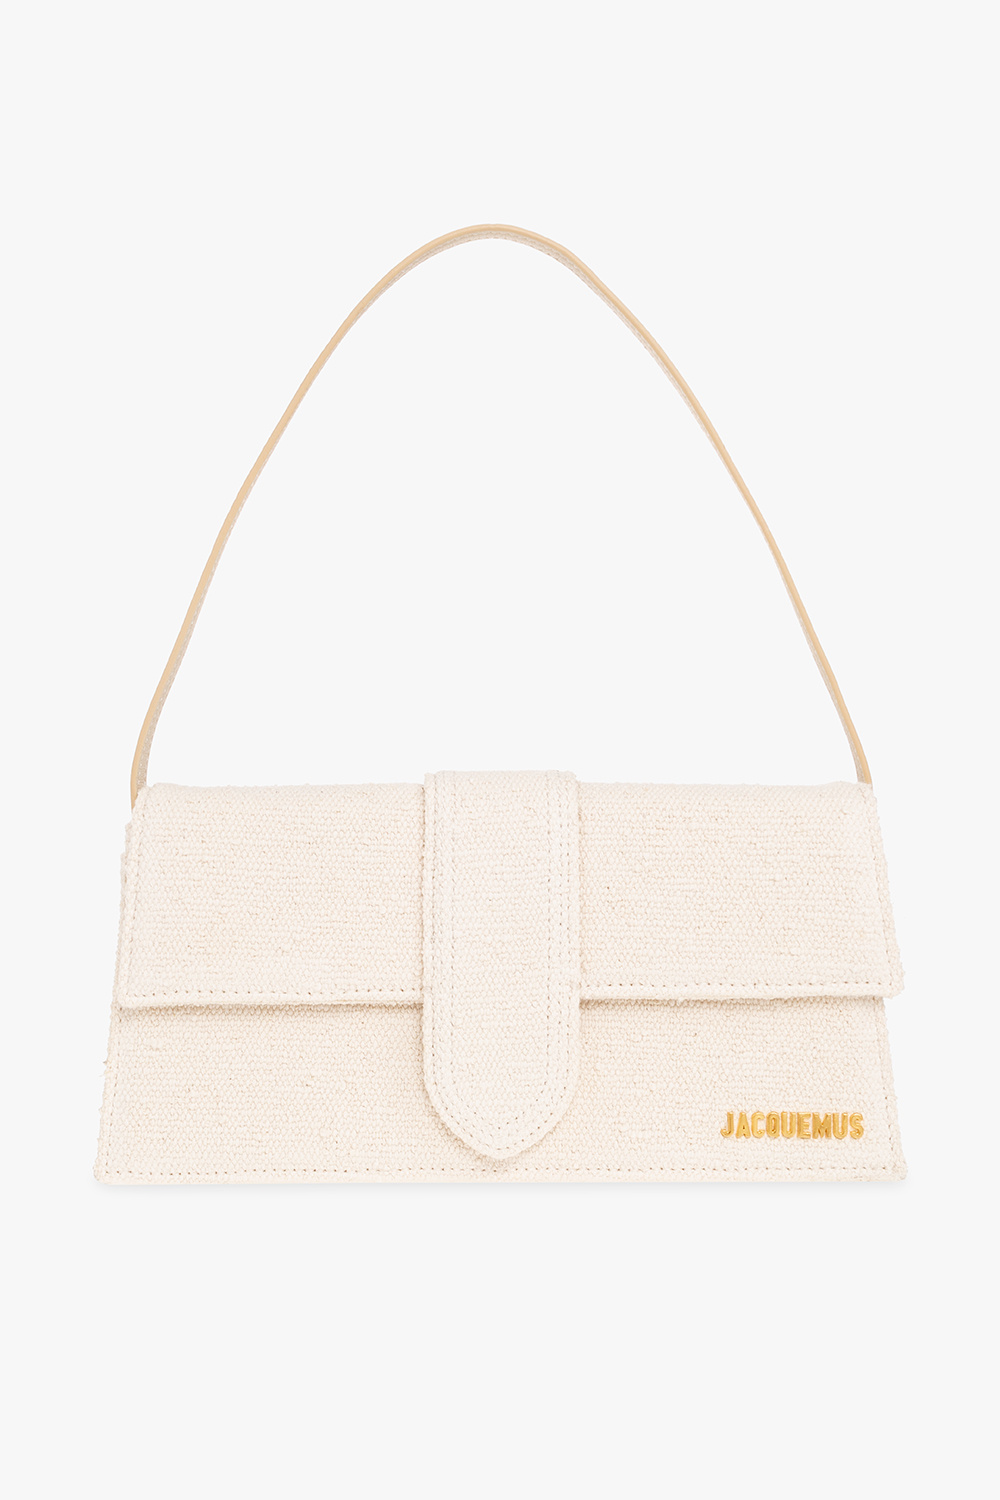 Jacquemus ‘Le Bambino Long’ shoulder philipp bag